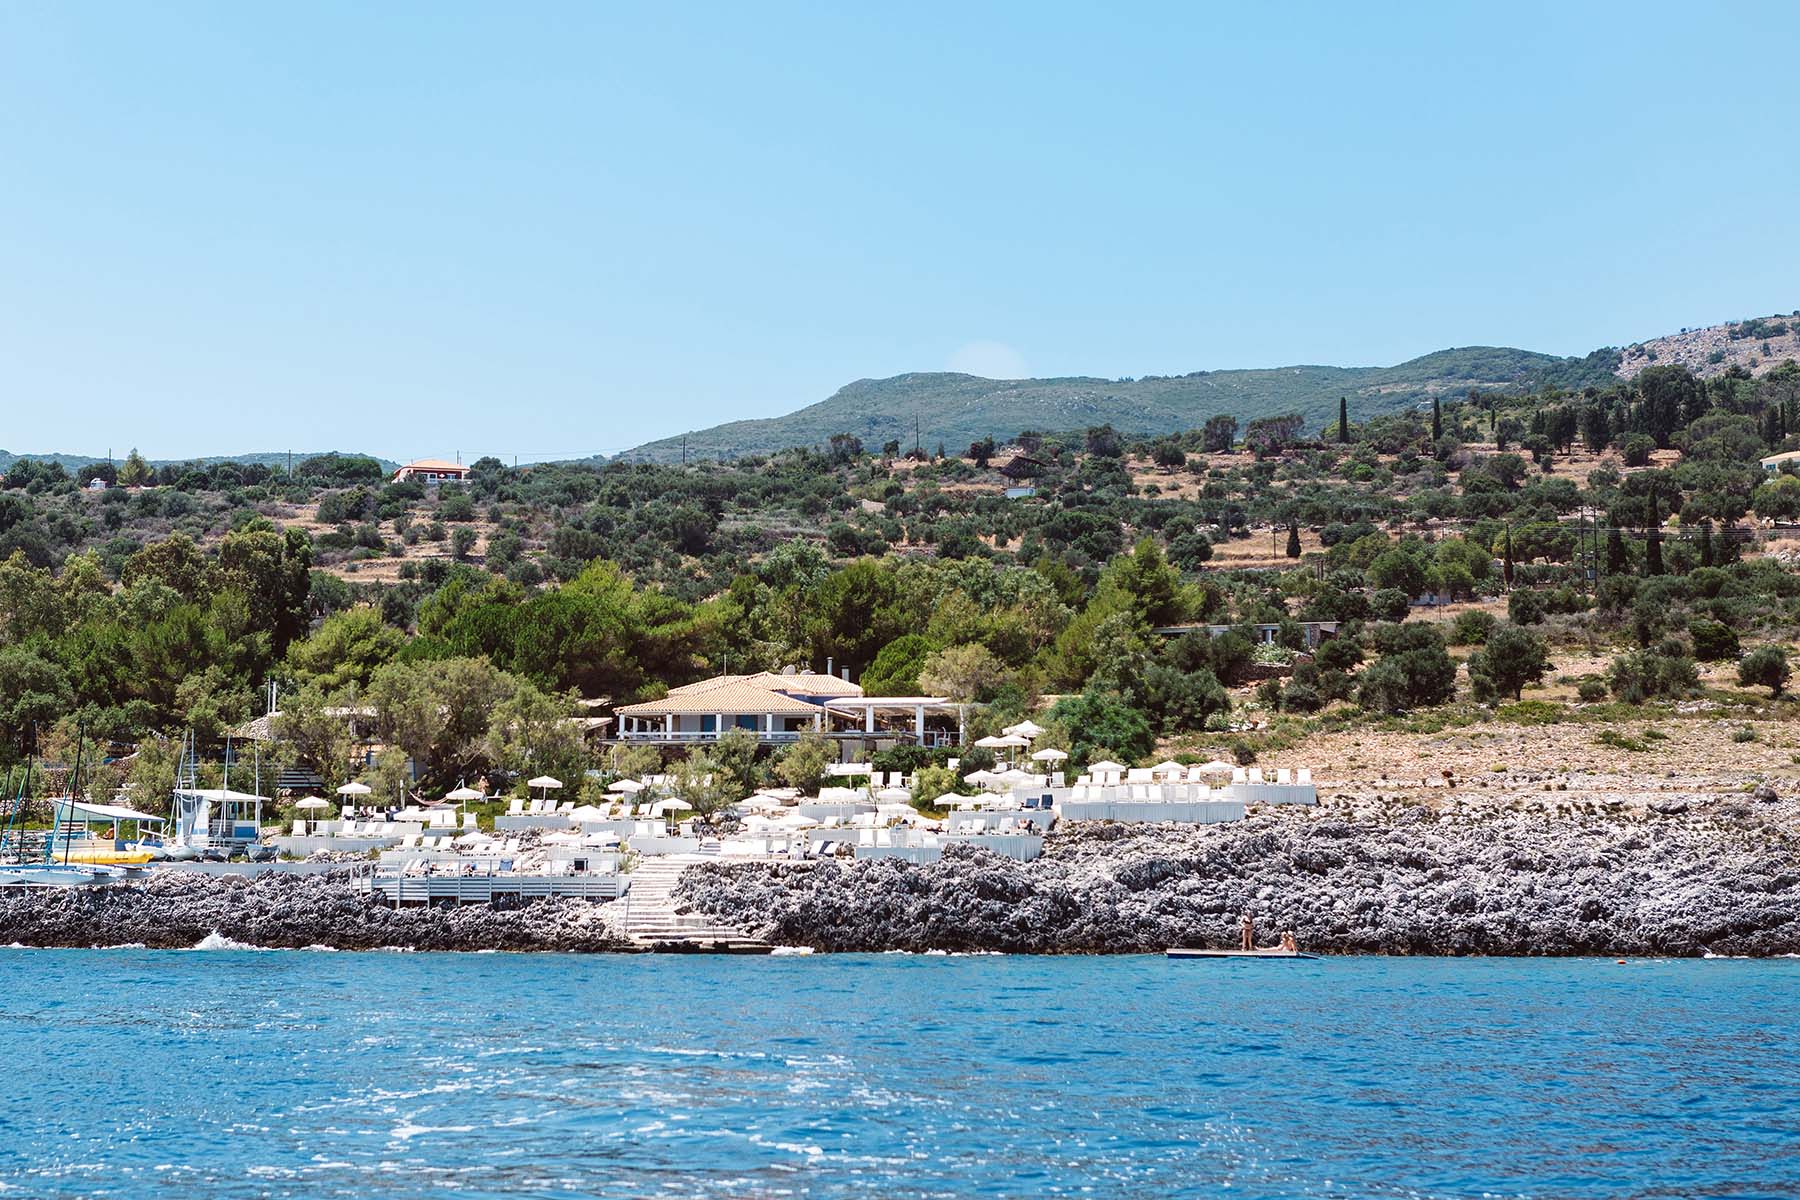 The Peligoni Club's sundecks overlooking the sea